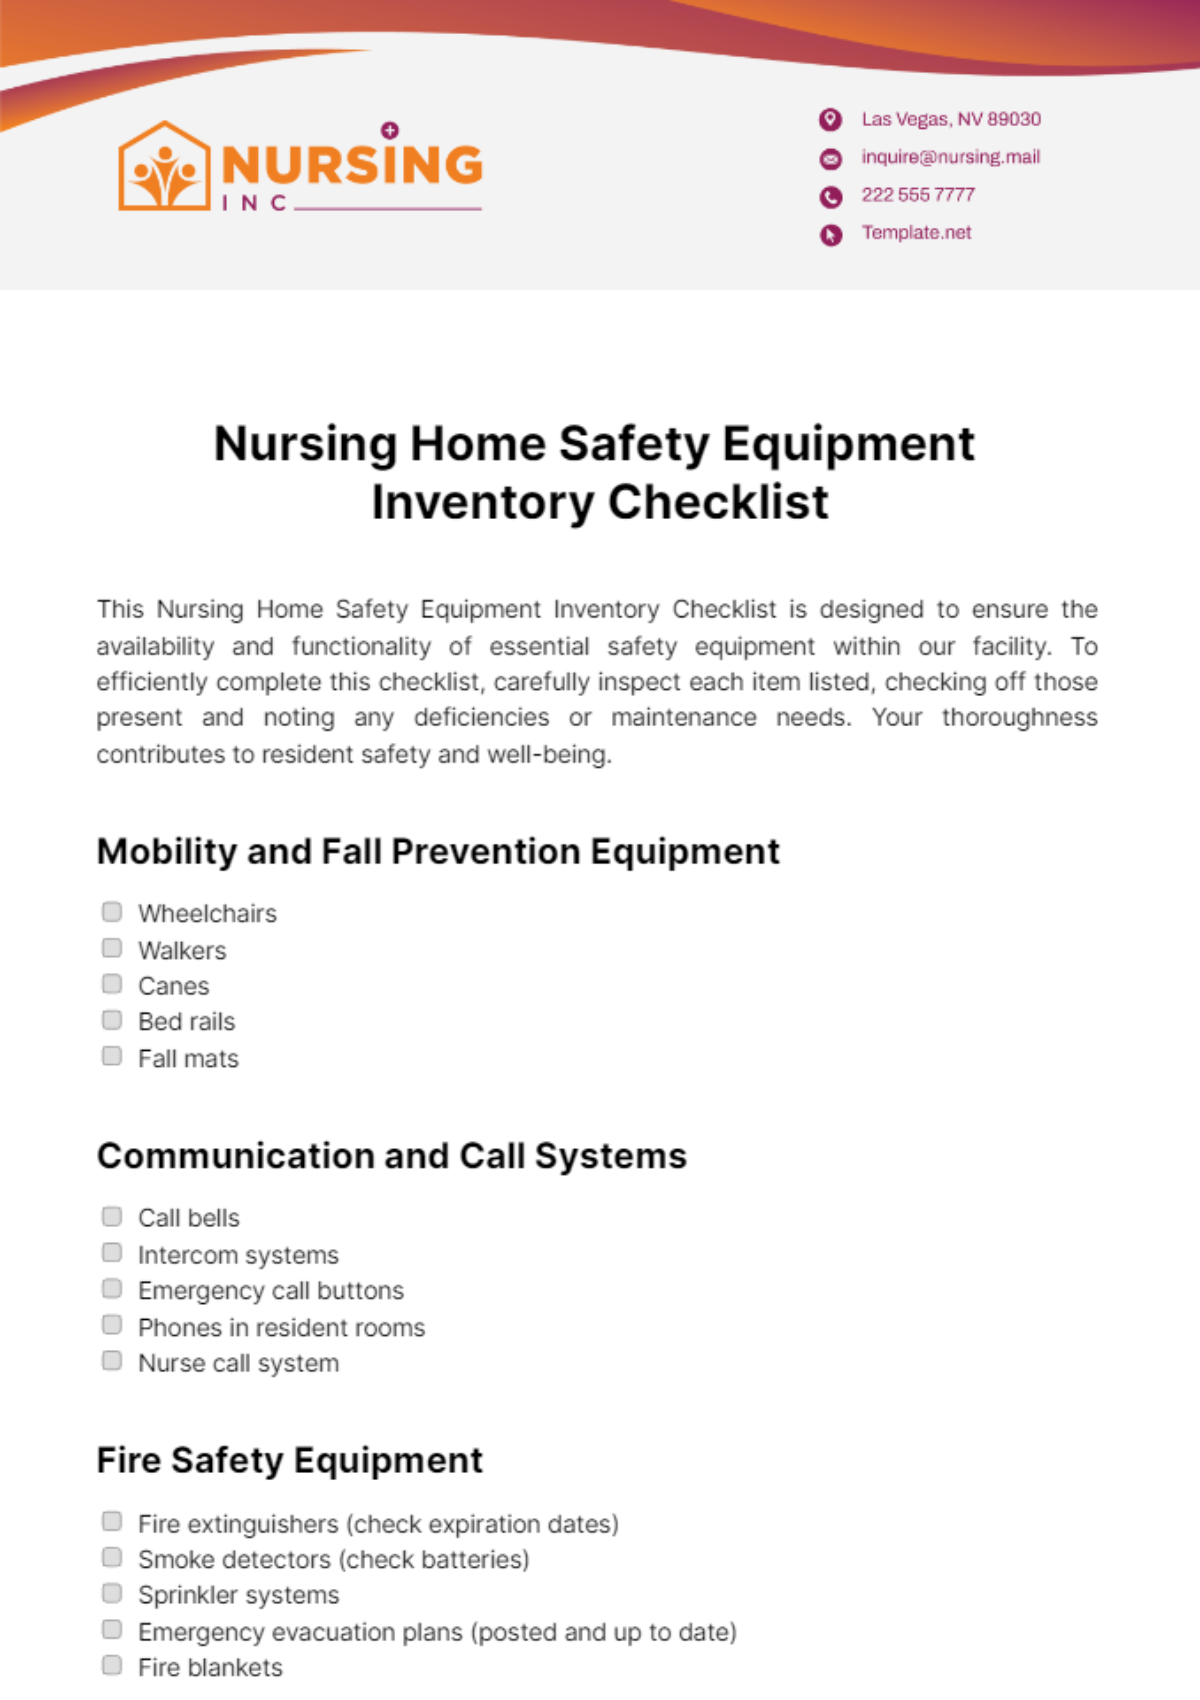 Nursing Home Safety Equipment Inventory Checklist Template